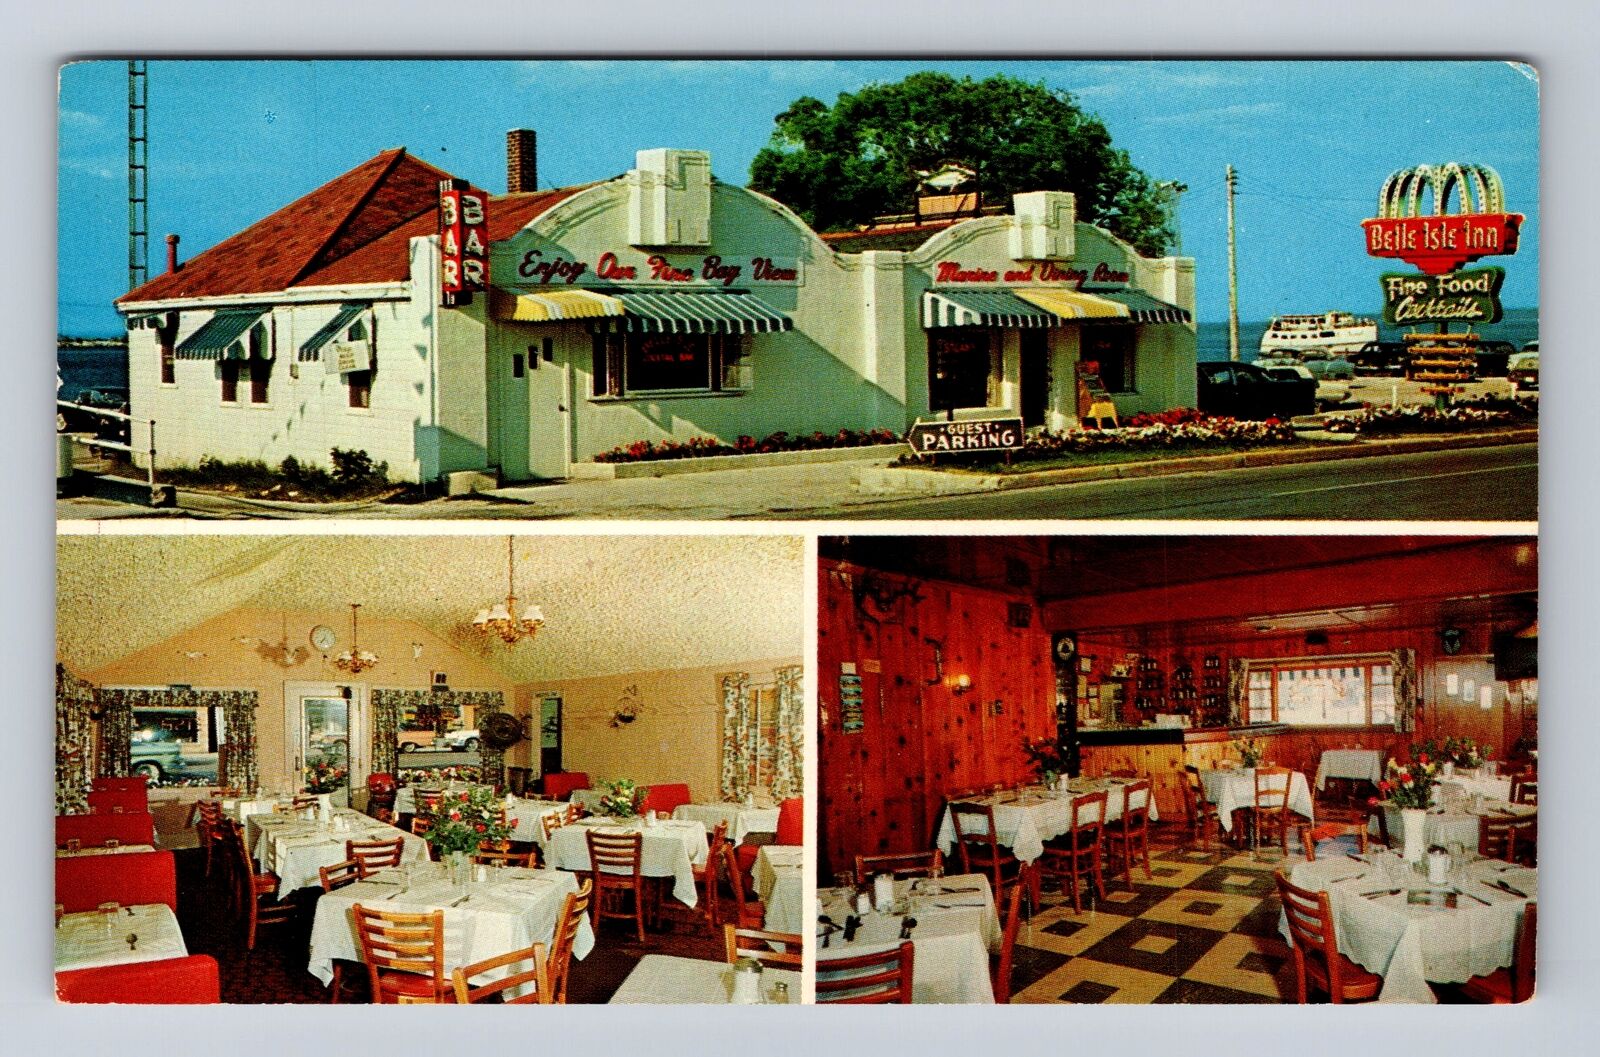 St Ignace MI-Michigan, Belle Isle Finer Foods, Advertising, Vintage Postcard